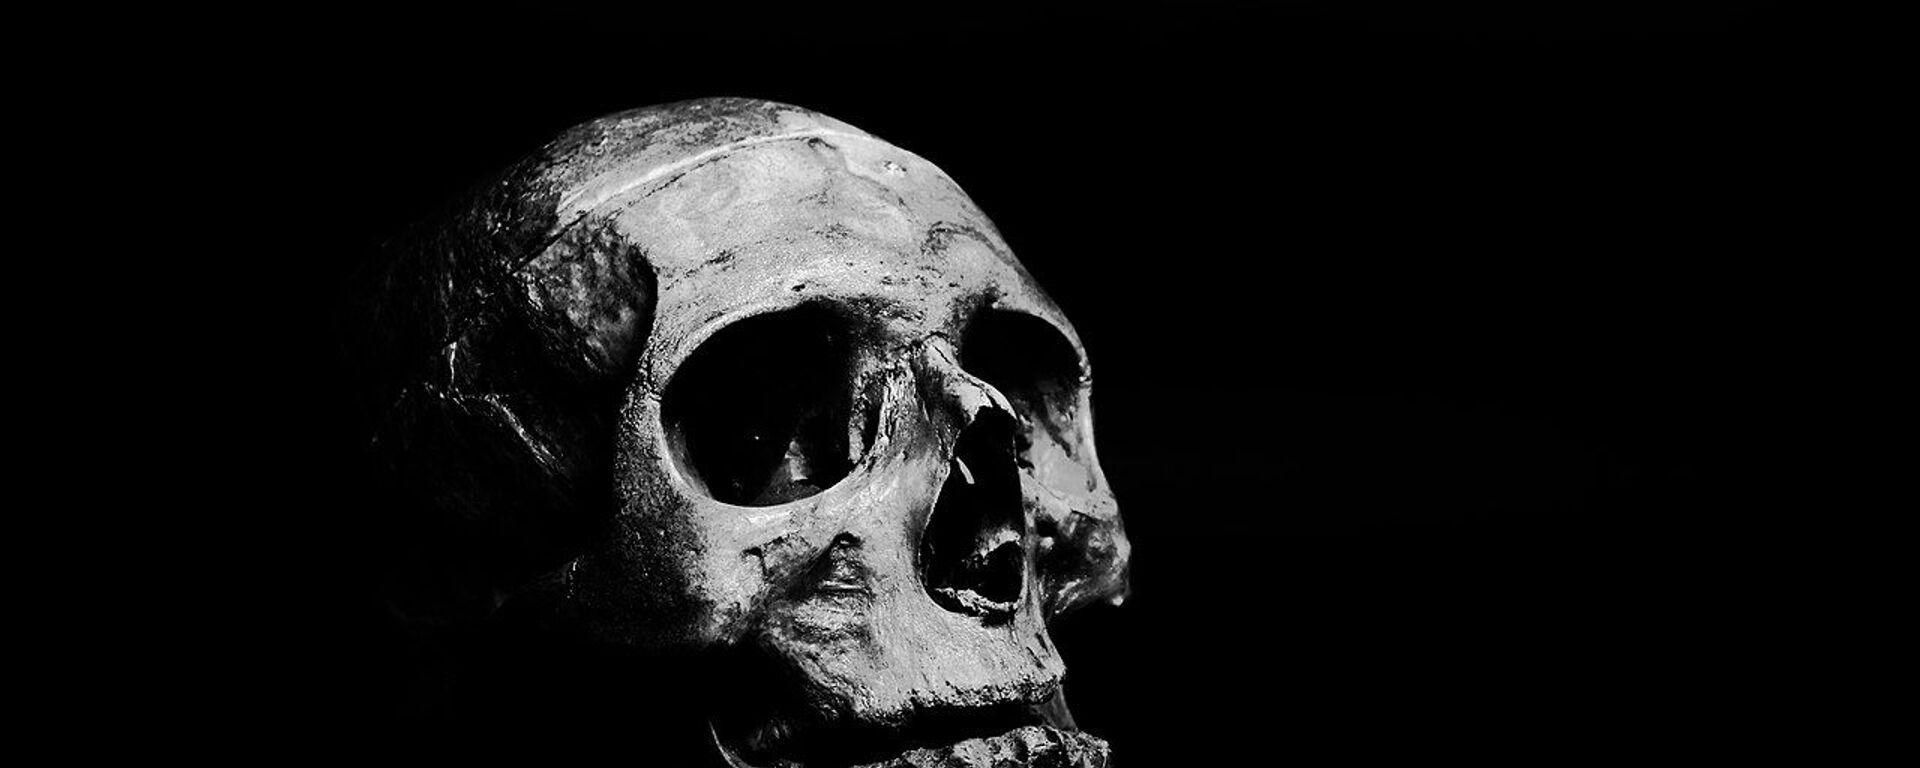 Skull on grayscale - Sputnik International, 1920, 25.08.2021